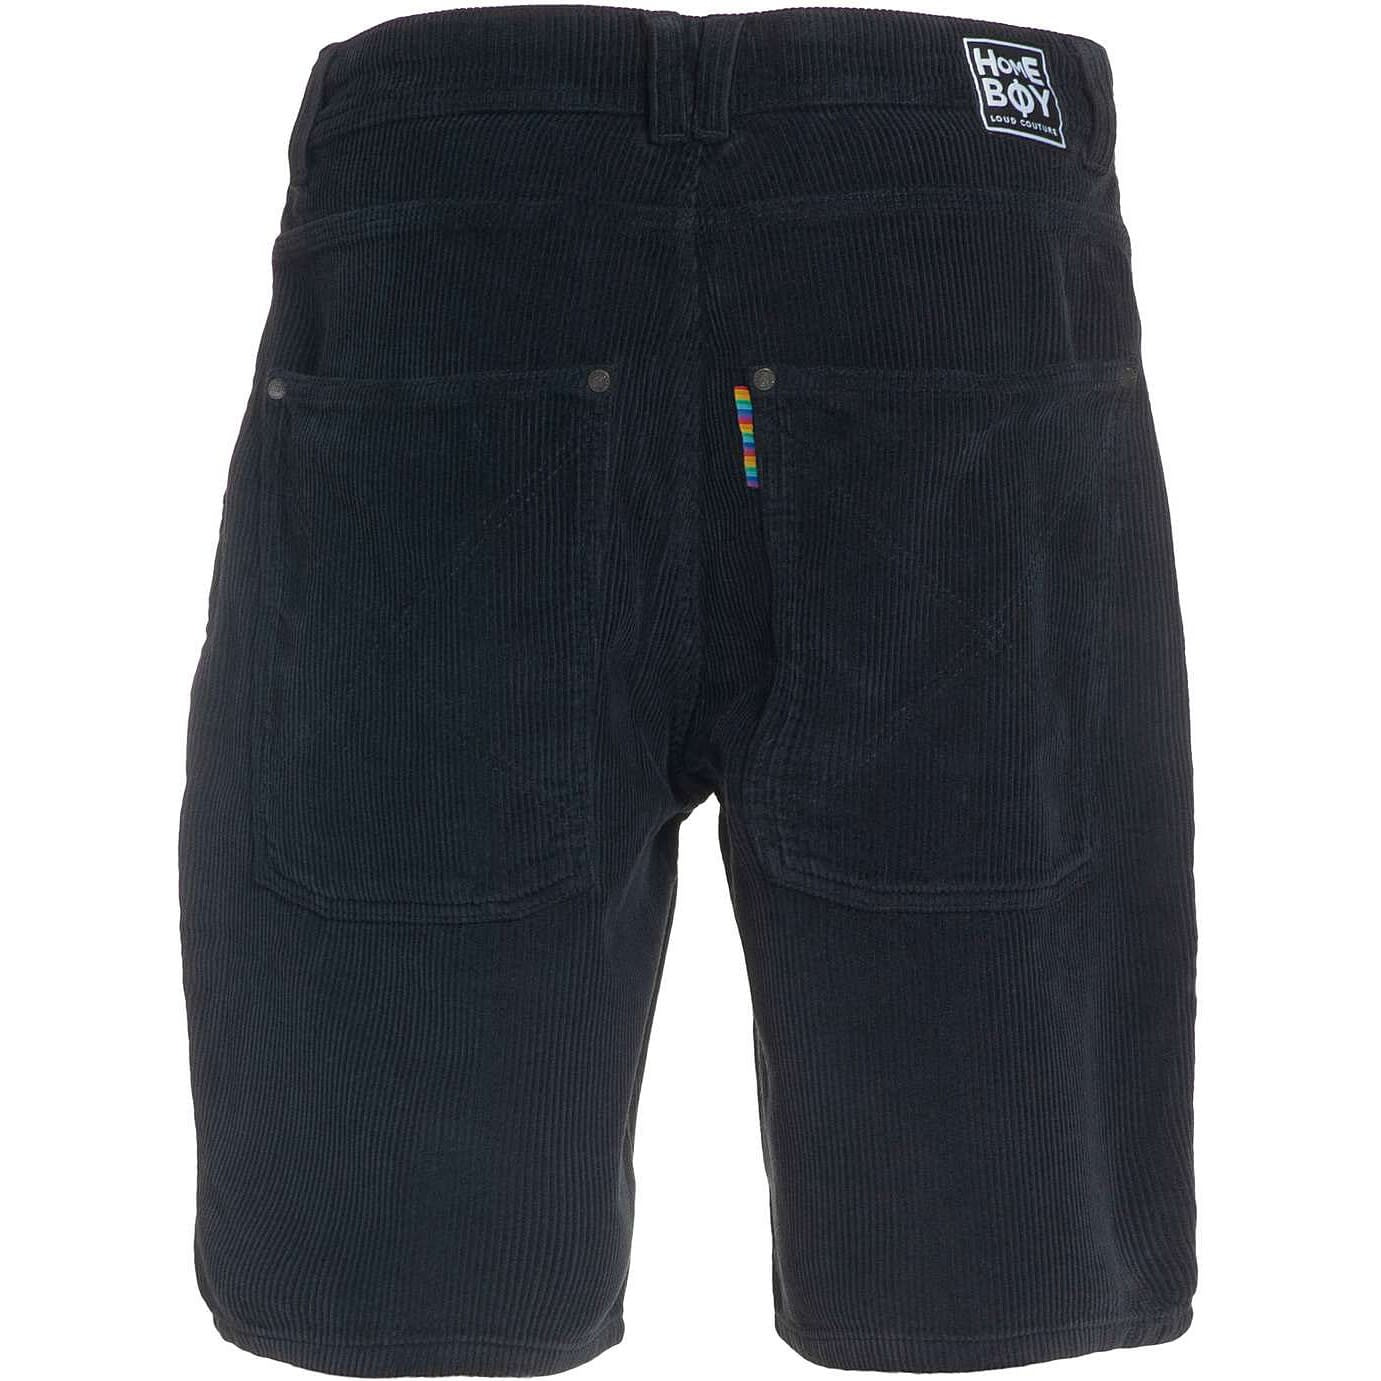 Homeboy X-Tra Baggy Cord Shorts Black